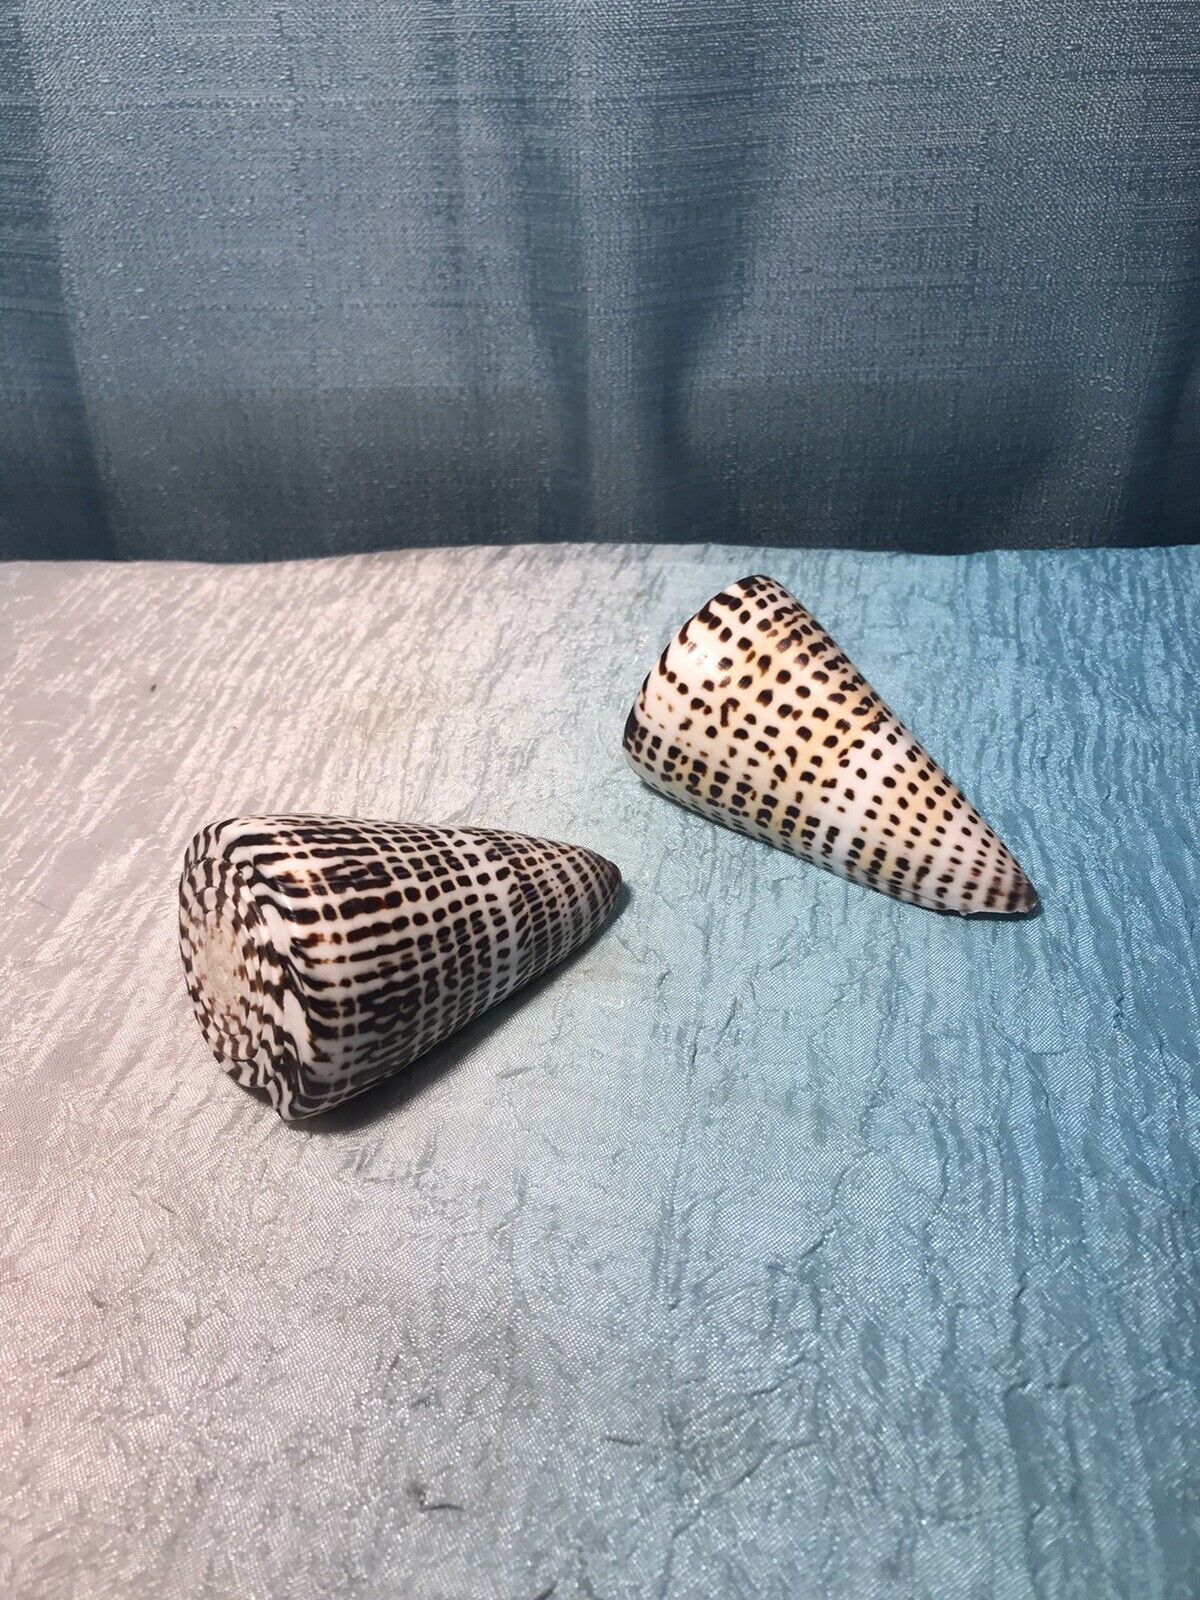 Pair of Leopard Cone Shell Conus leopardus Seashell 3.5”